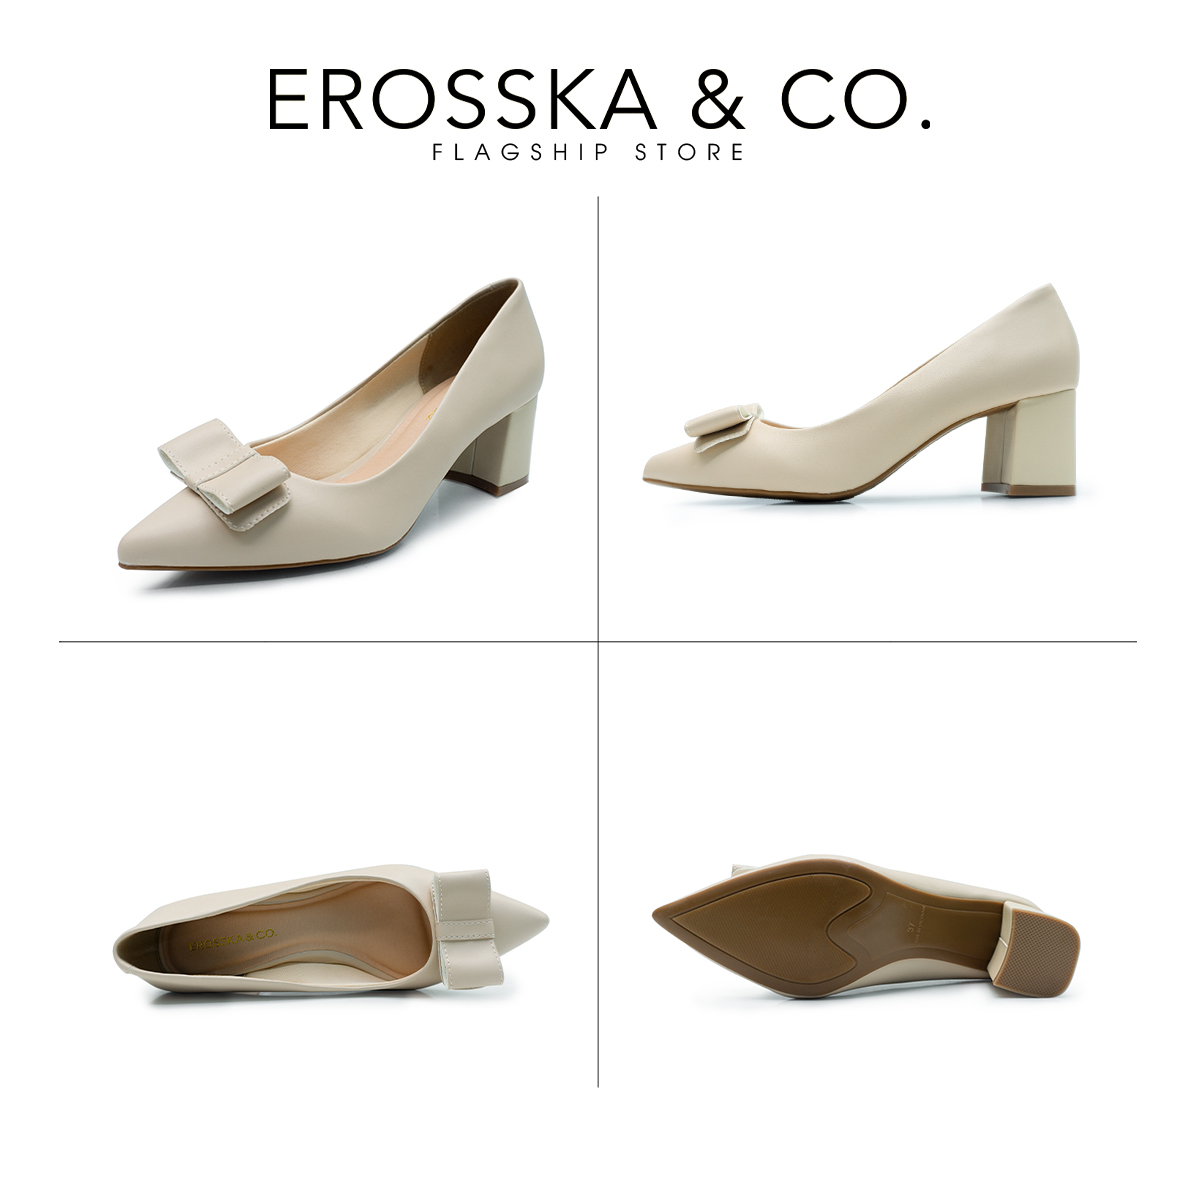 Erosska - Giày cao gót mũi nhọn phối nơ cao 5cm - EP015